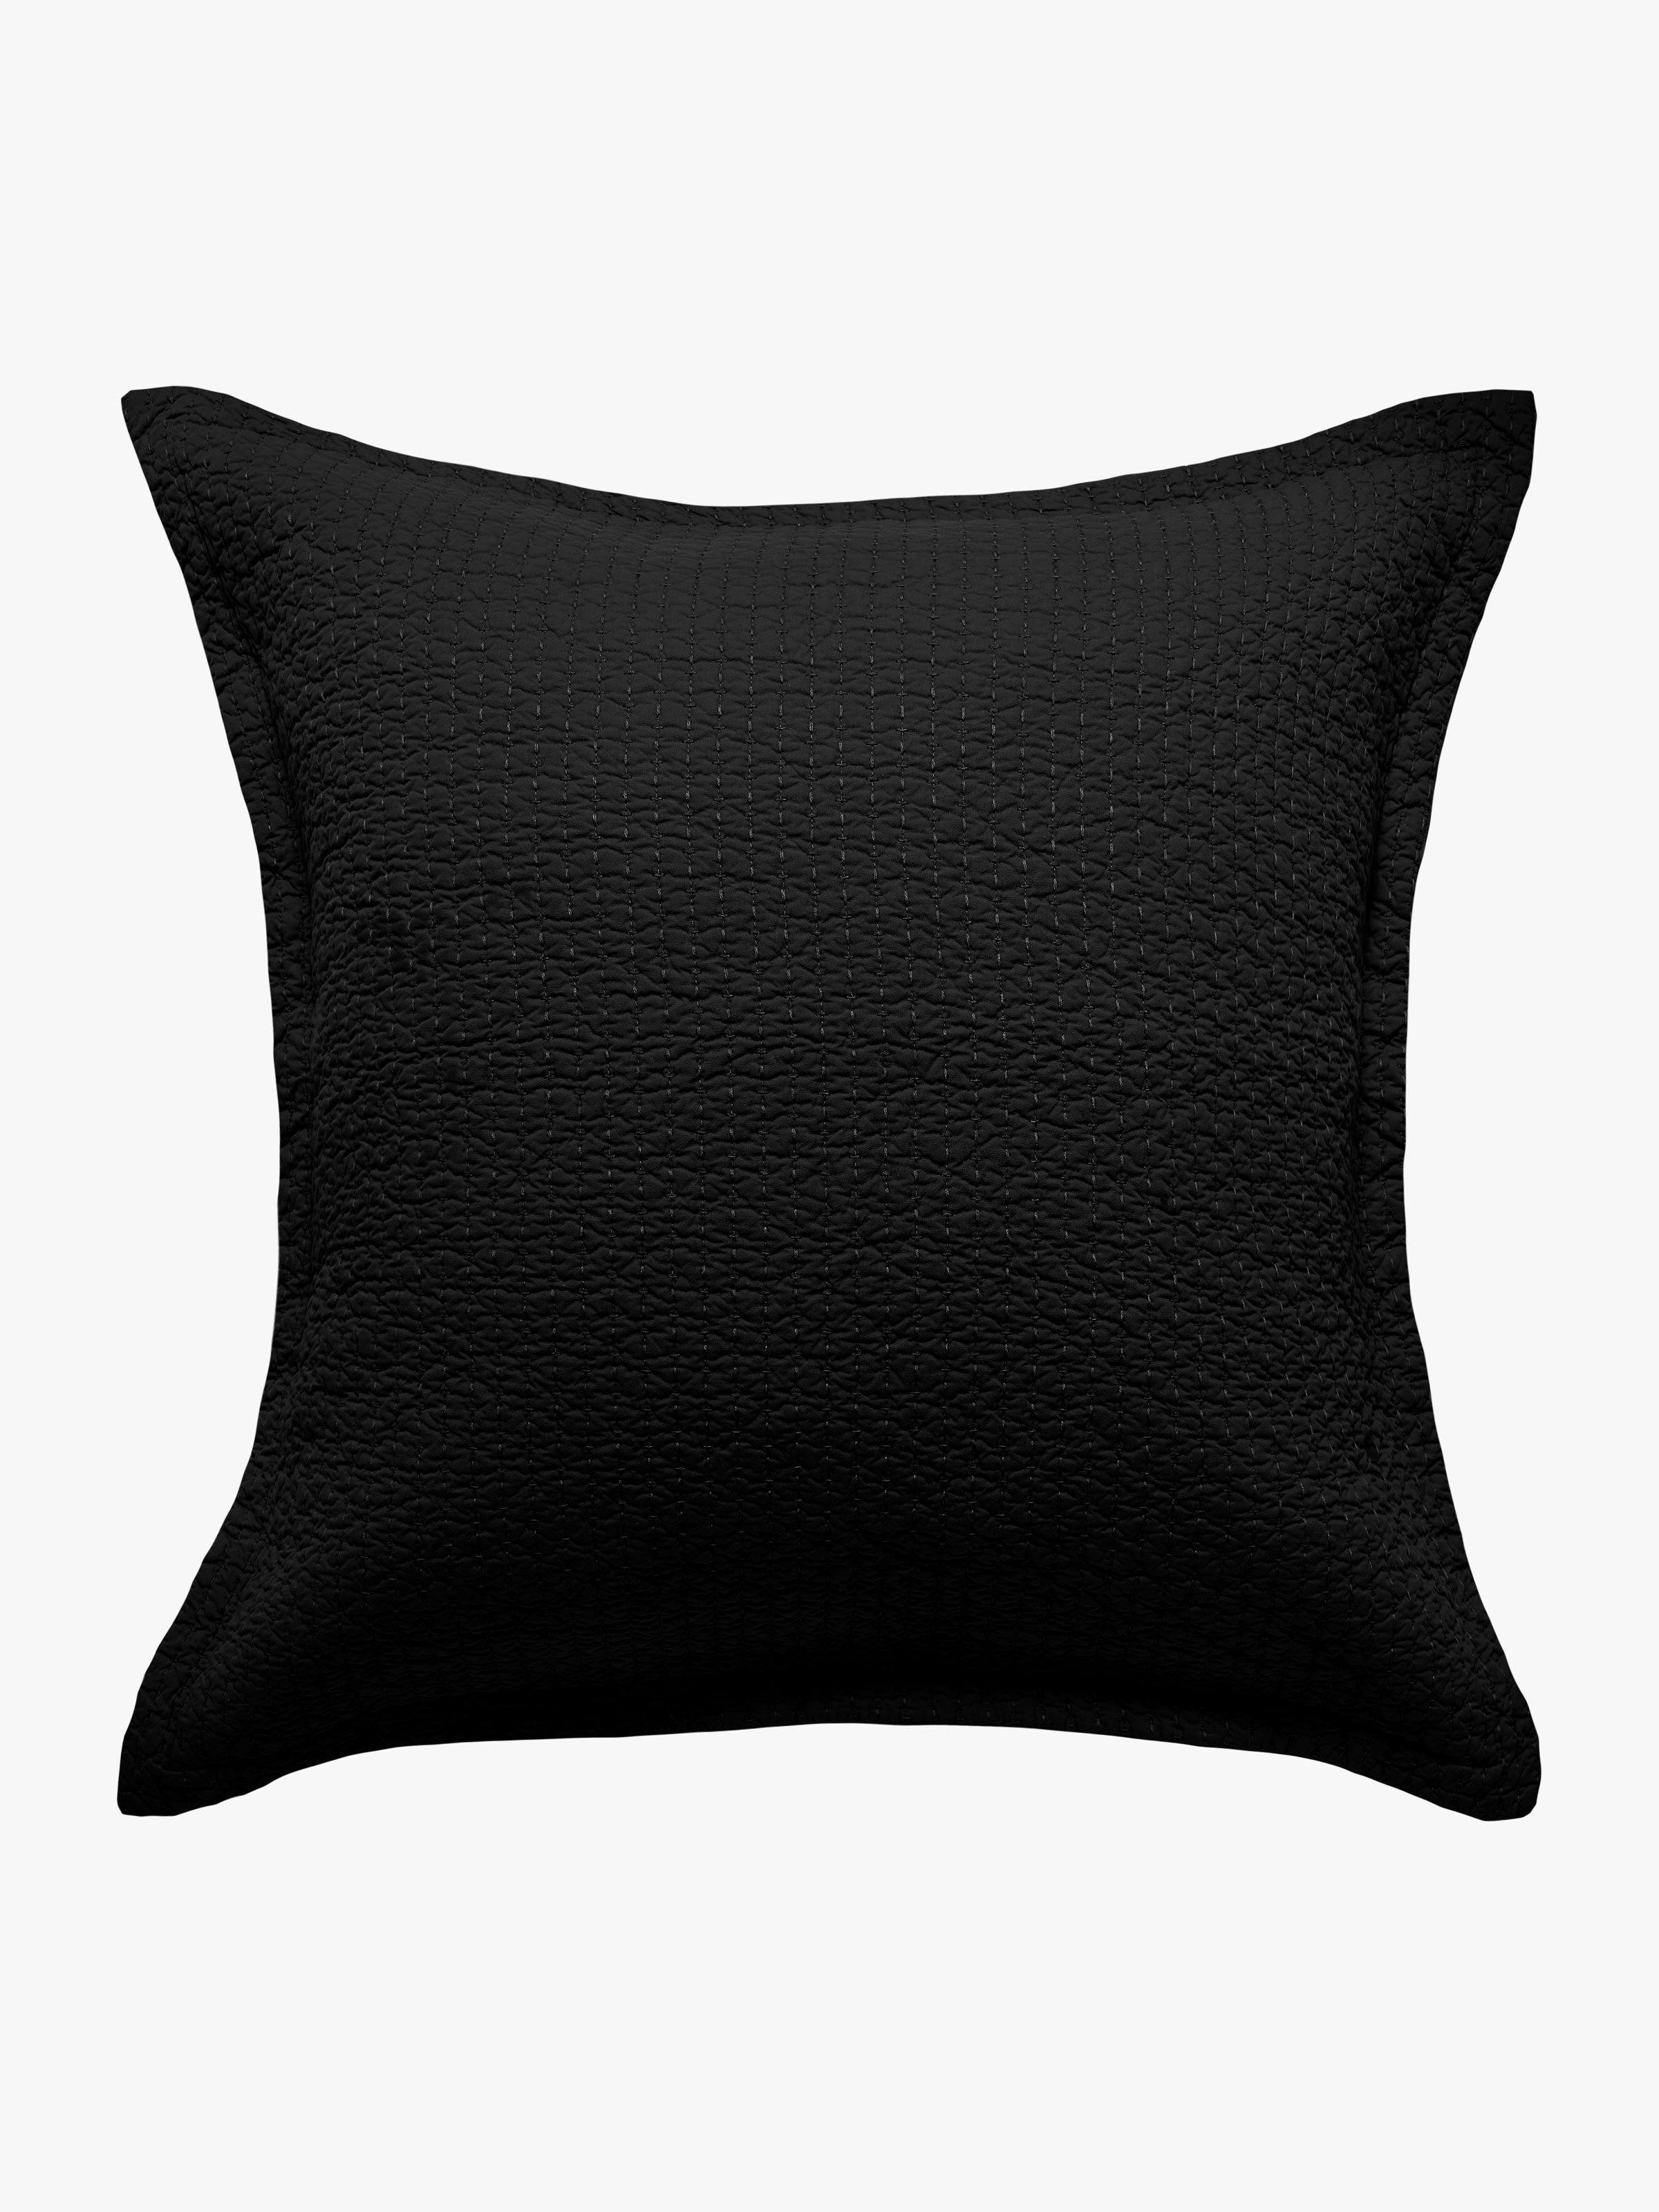 Aspen Quilted Pillowcase - Black Quilted Pillowcase 2020 European Pillowcase 